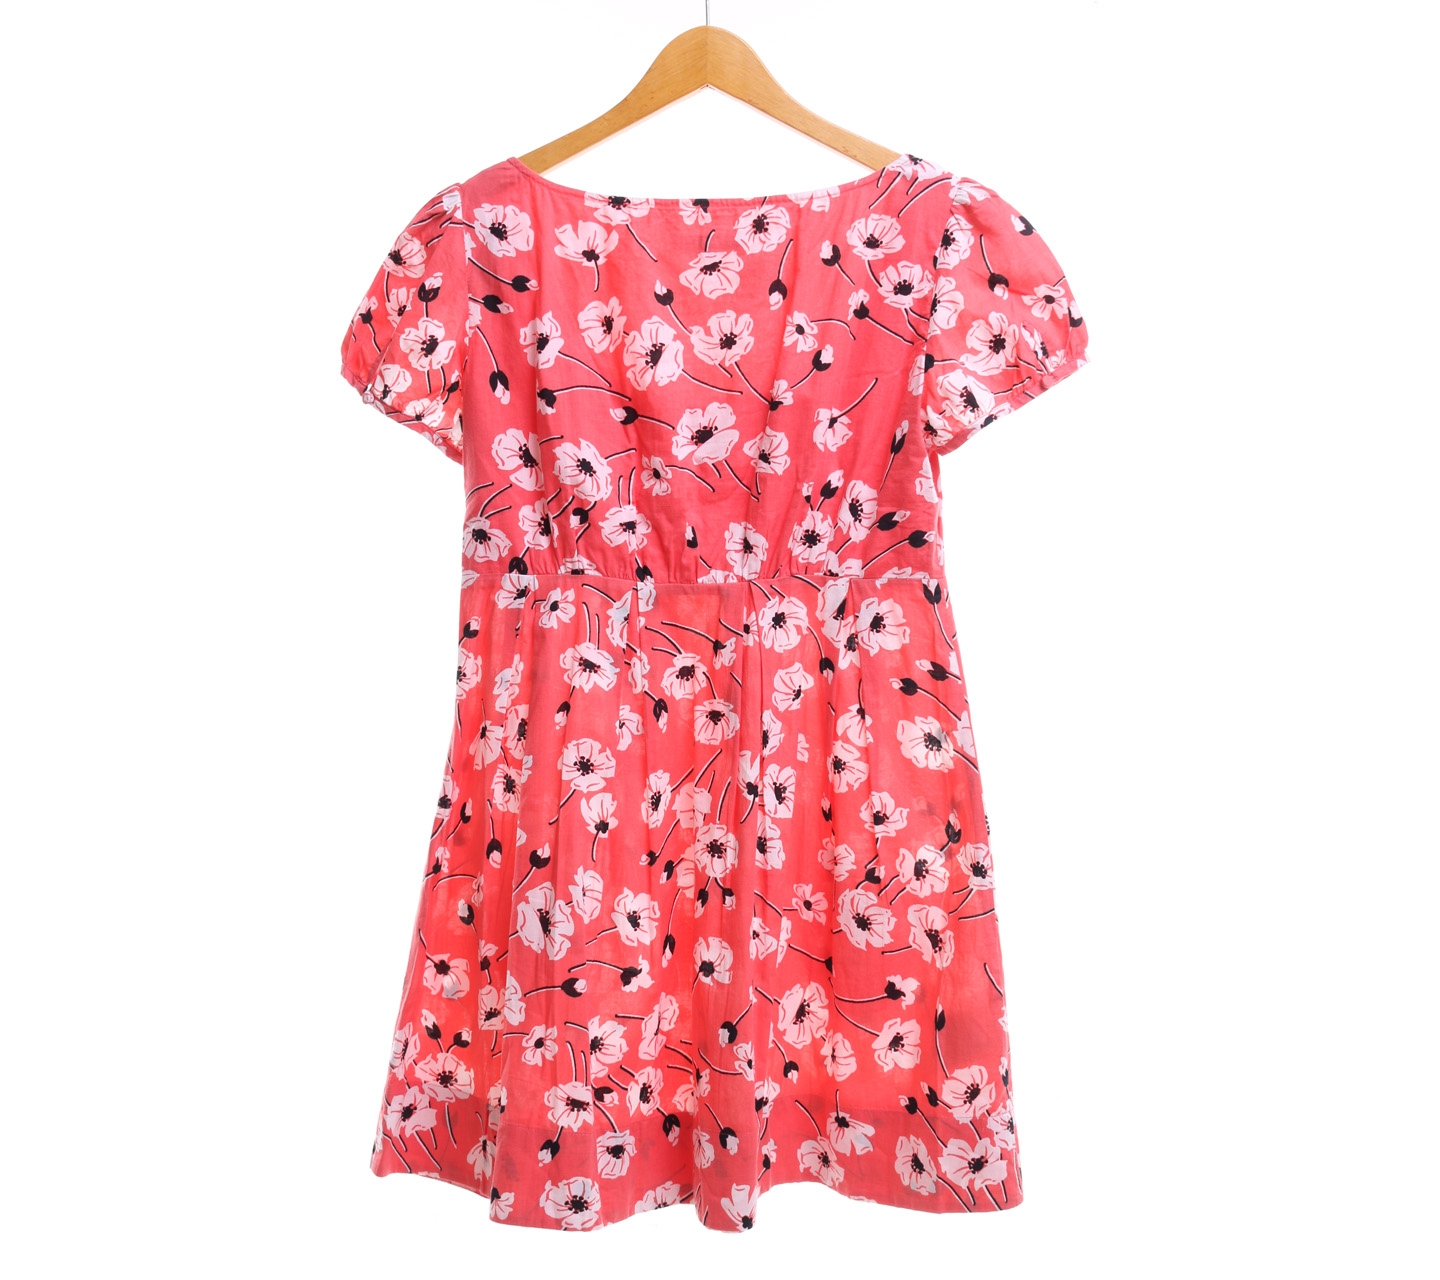 Laura Ashley Pink Floral Mini Dress